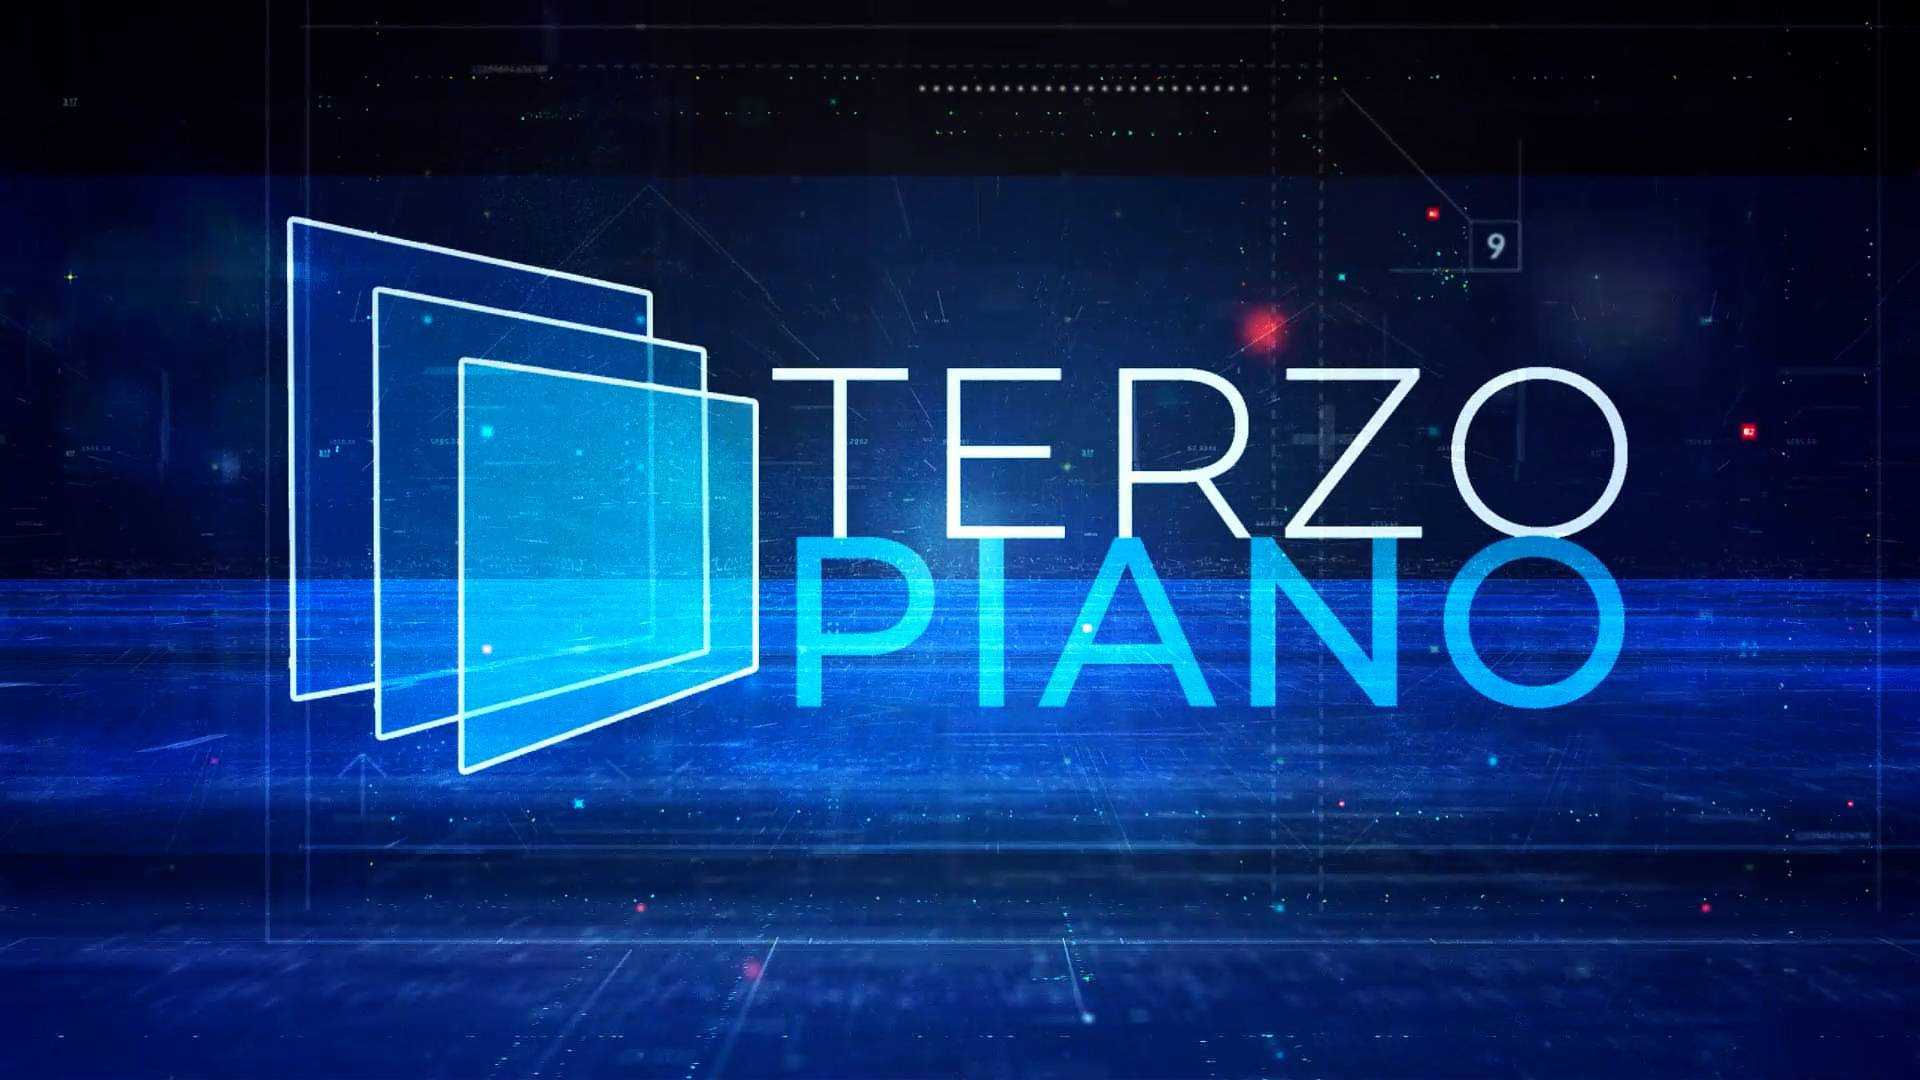 Logo_Terzo_Piano_Sigla-3.jpg